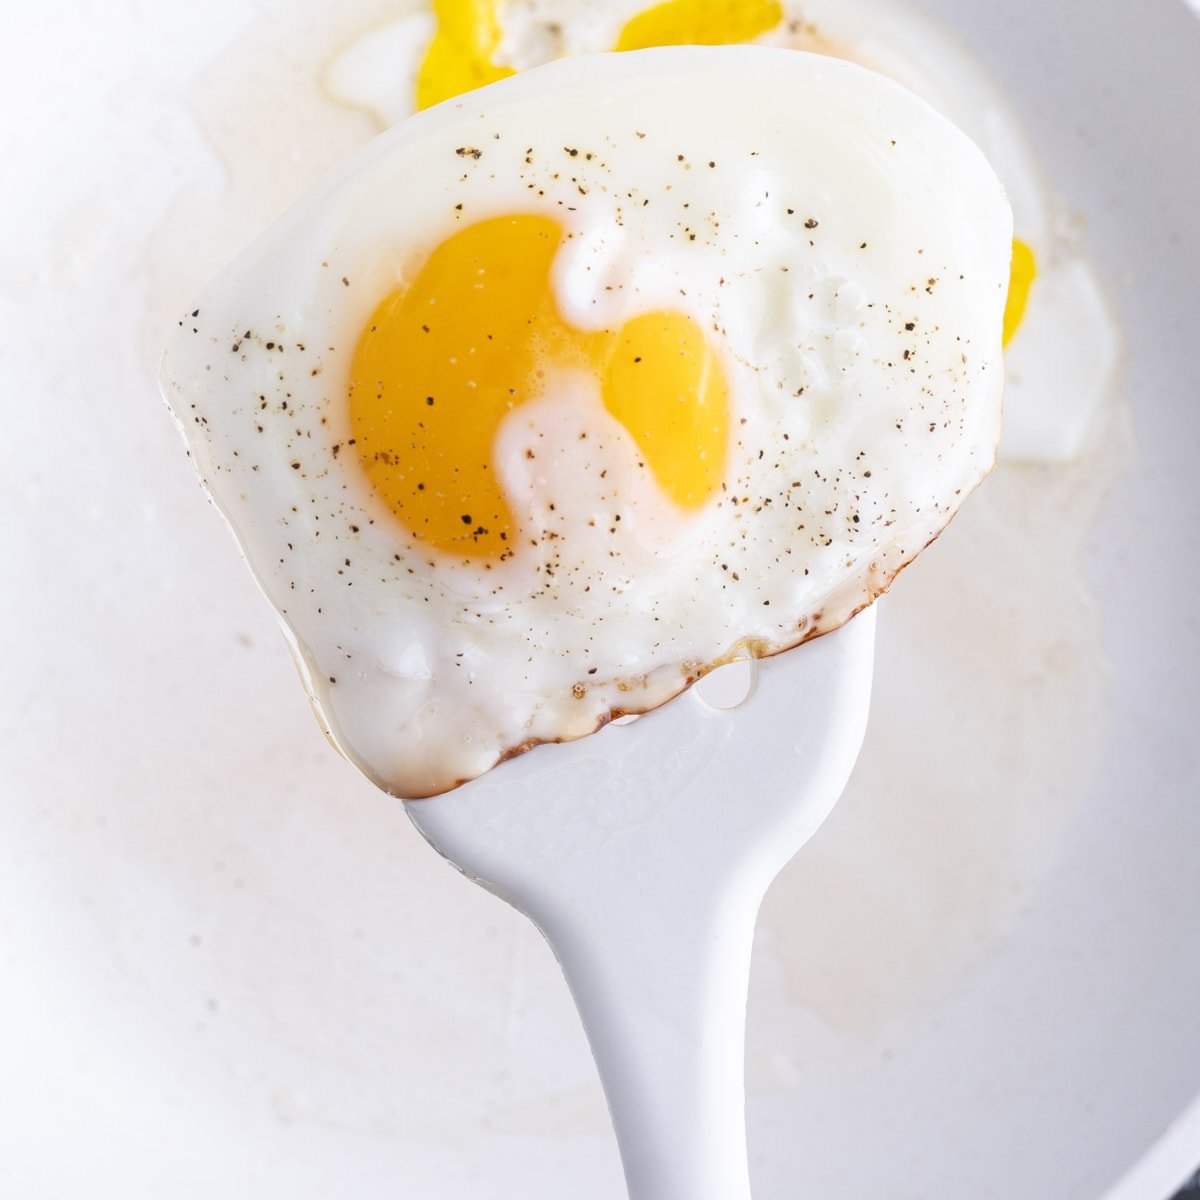 https://marleysmenu.com/wp-content/uploads/2023/01/Flipping-Fried-Egg-on-Spatula.jpg